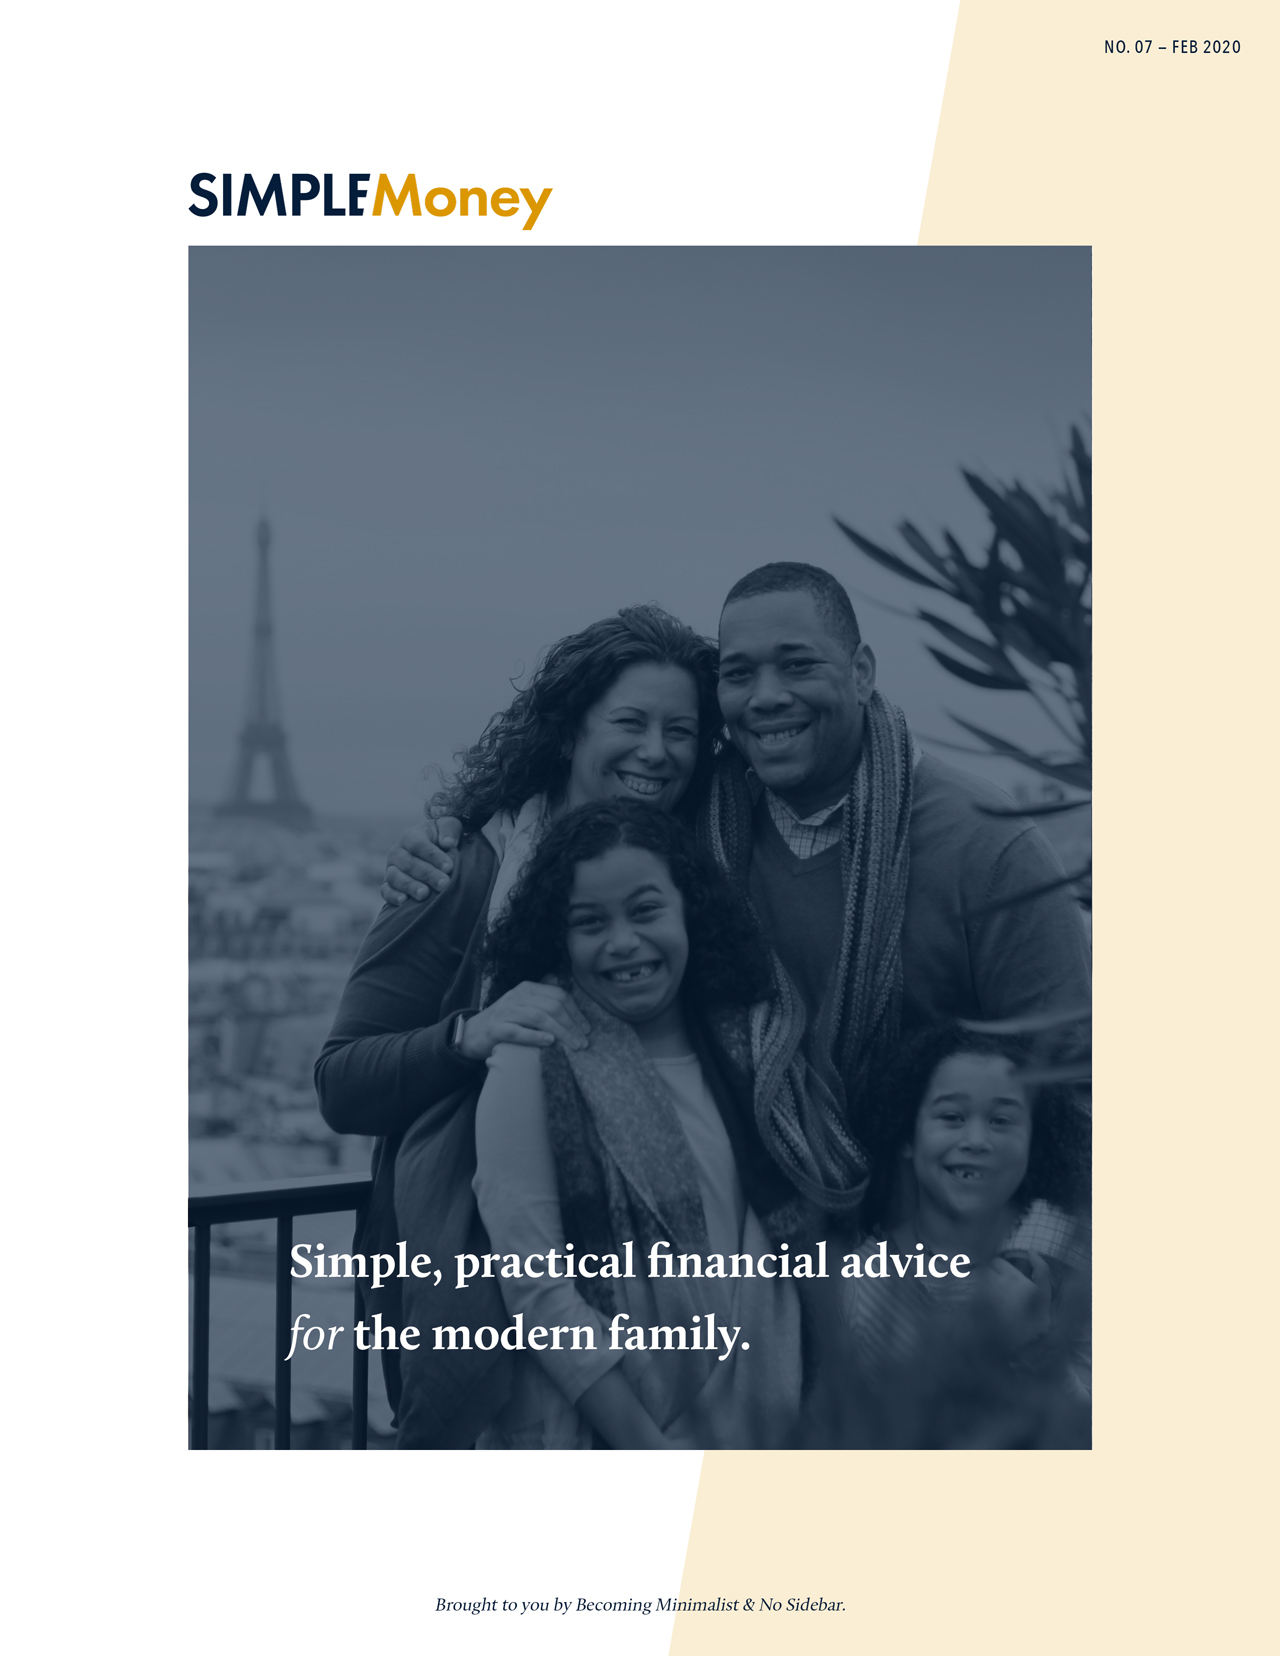 Simple Money Magazine Issue #07